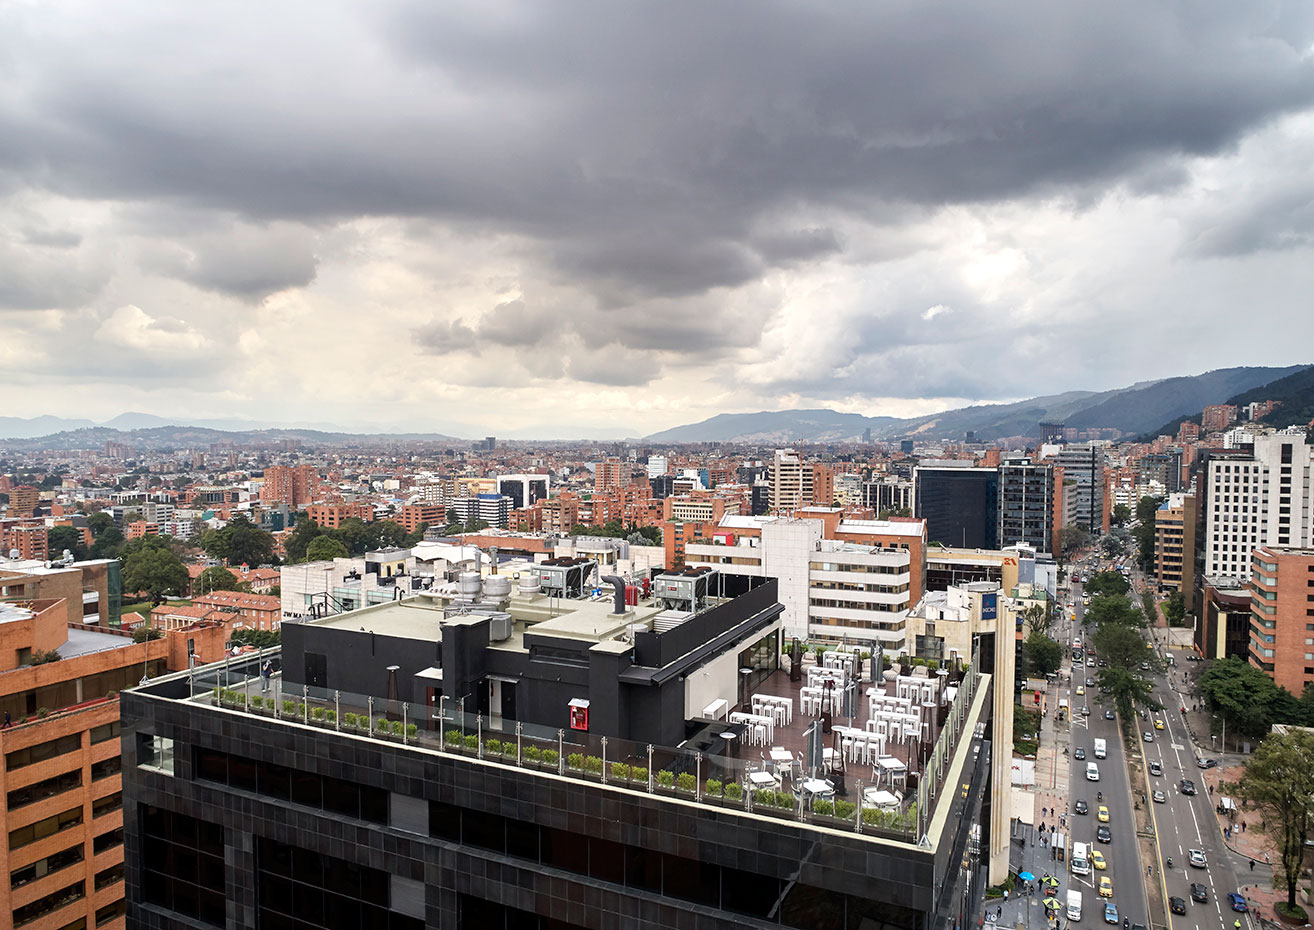 Hotel Hilton Bogotá enews imagenes imagen 6962